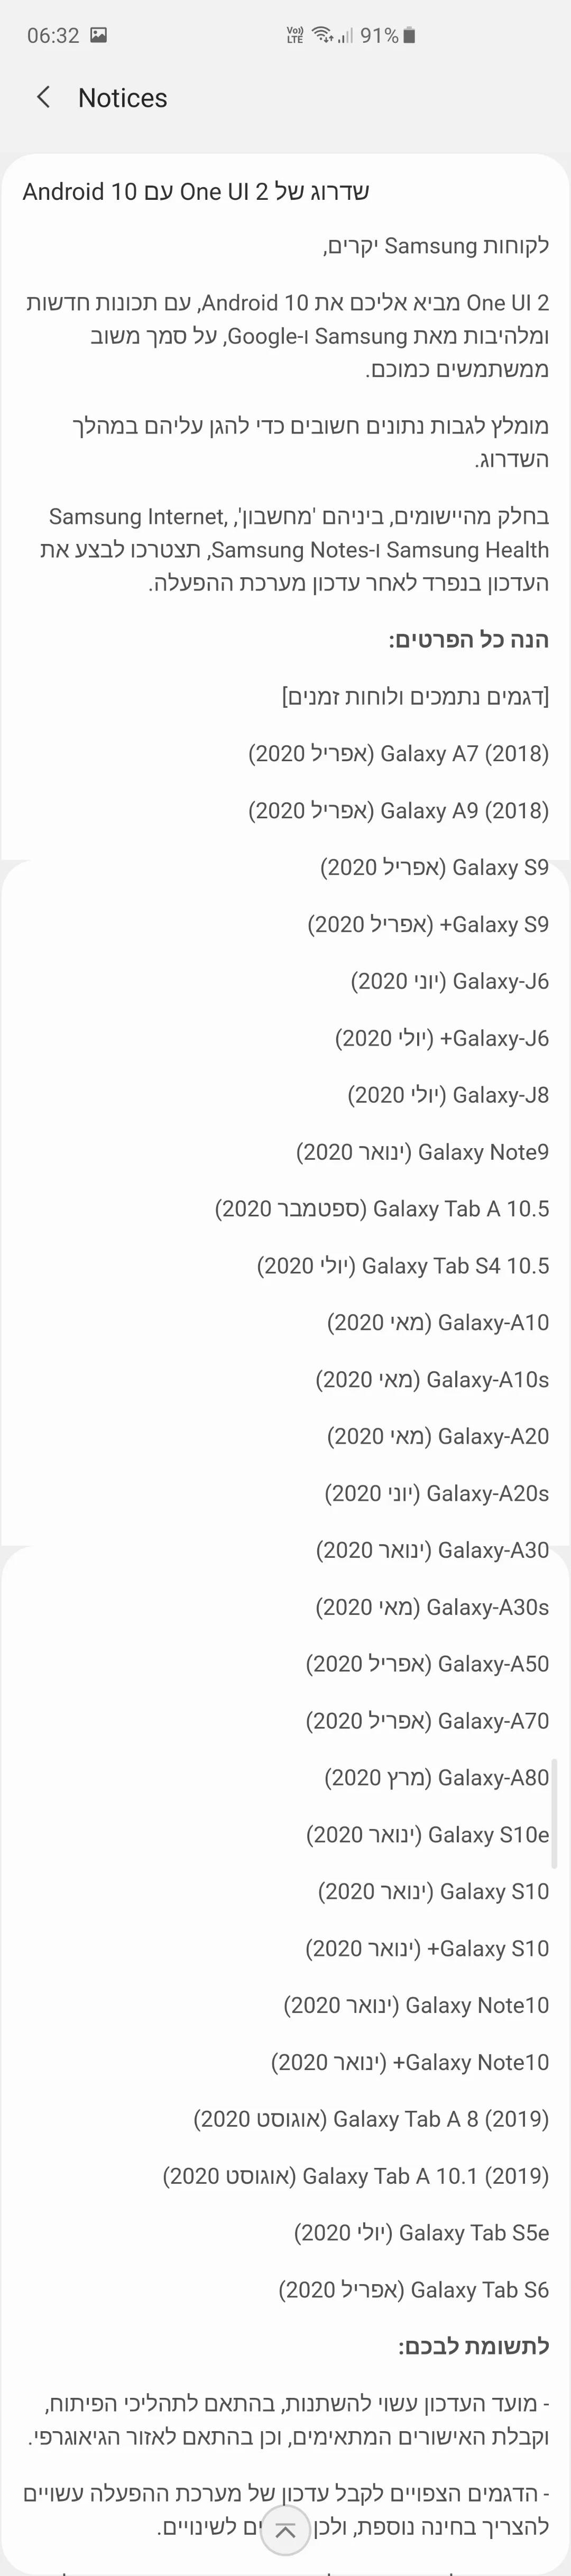 Android 10 udgivelsesdato samsung telefoner